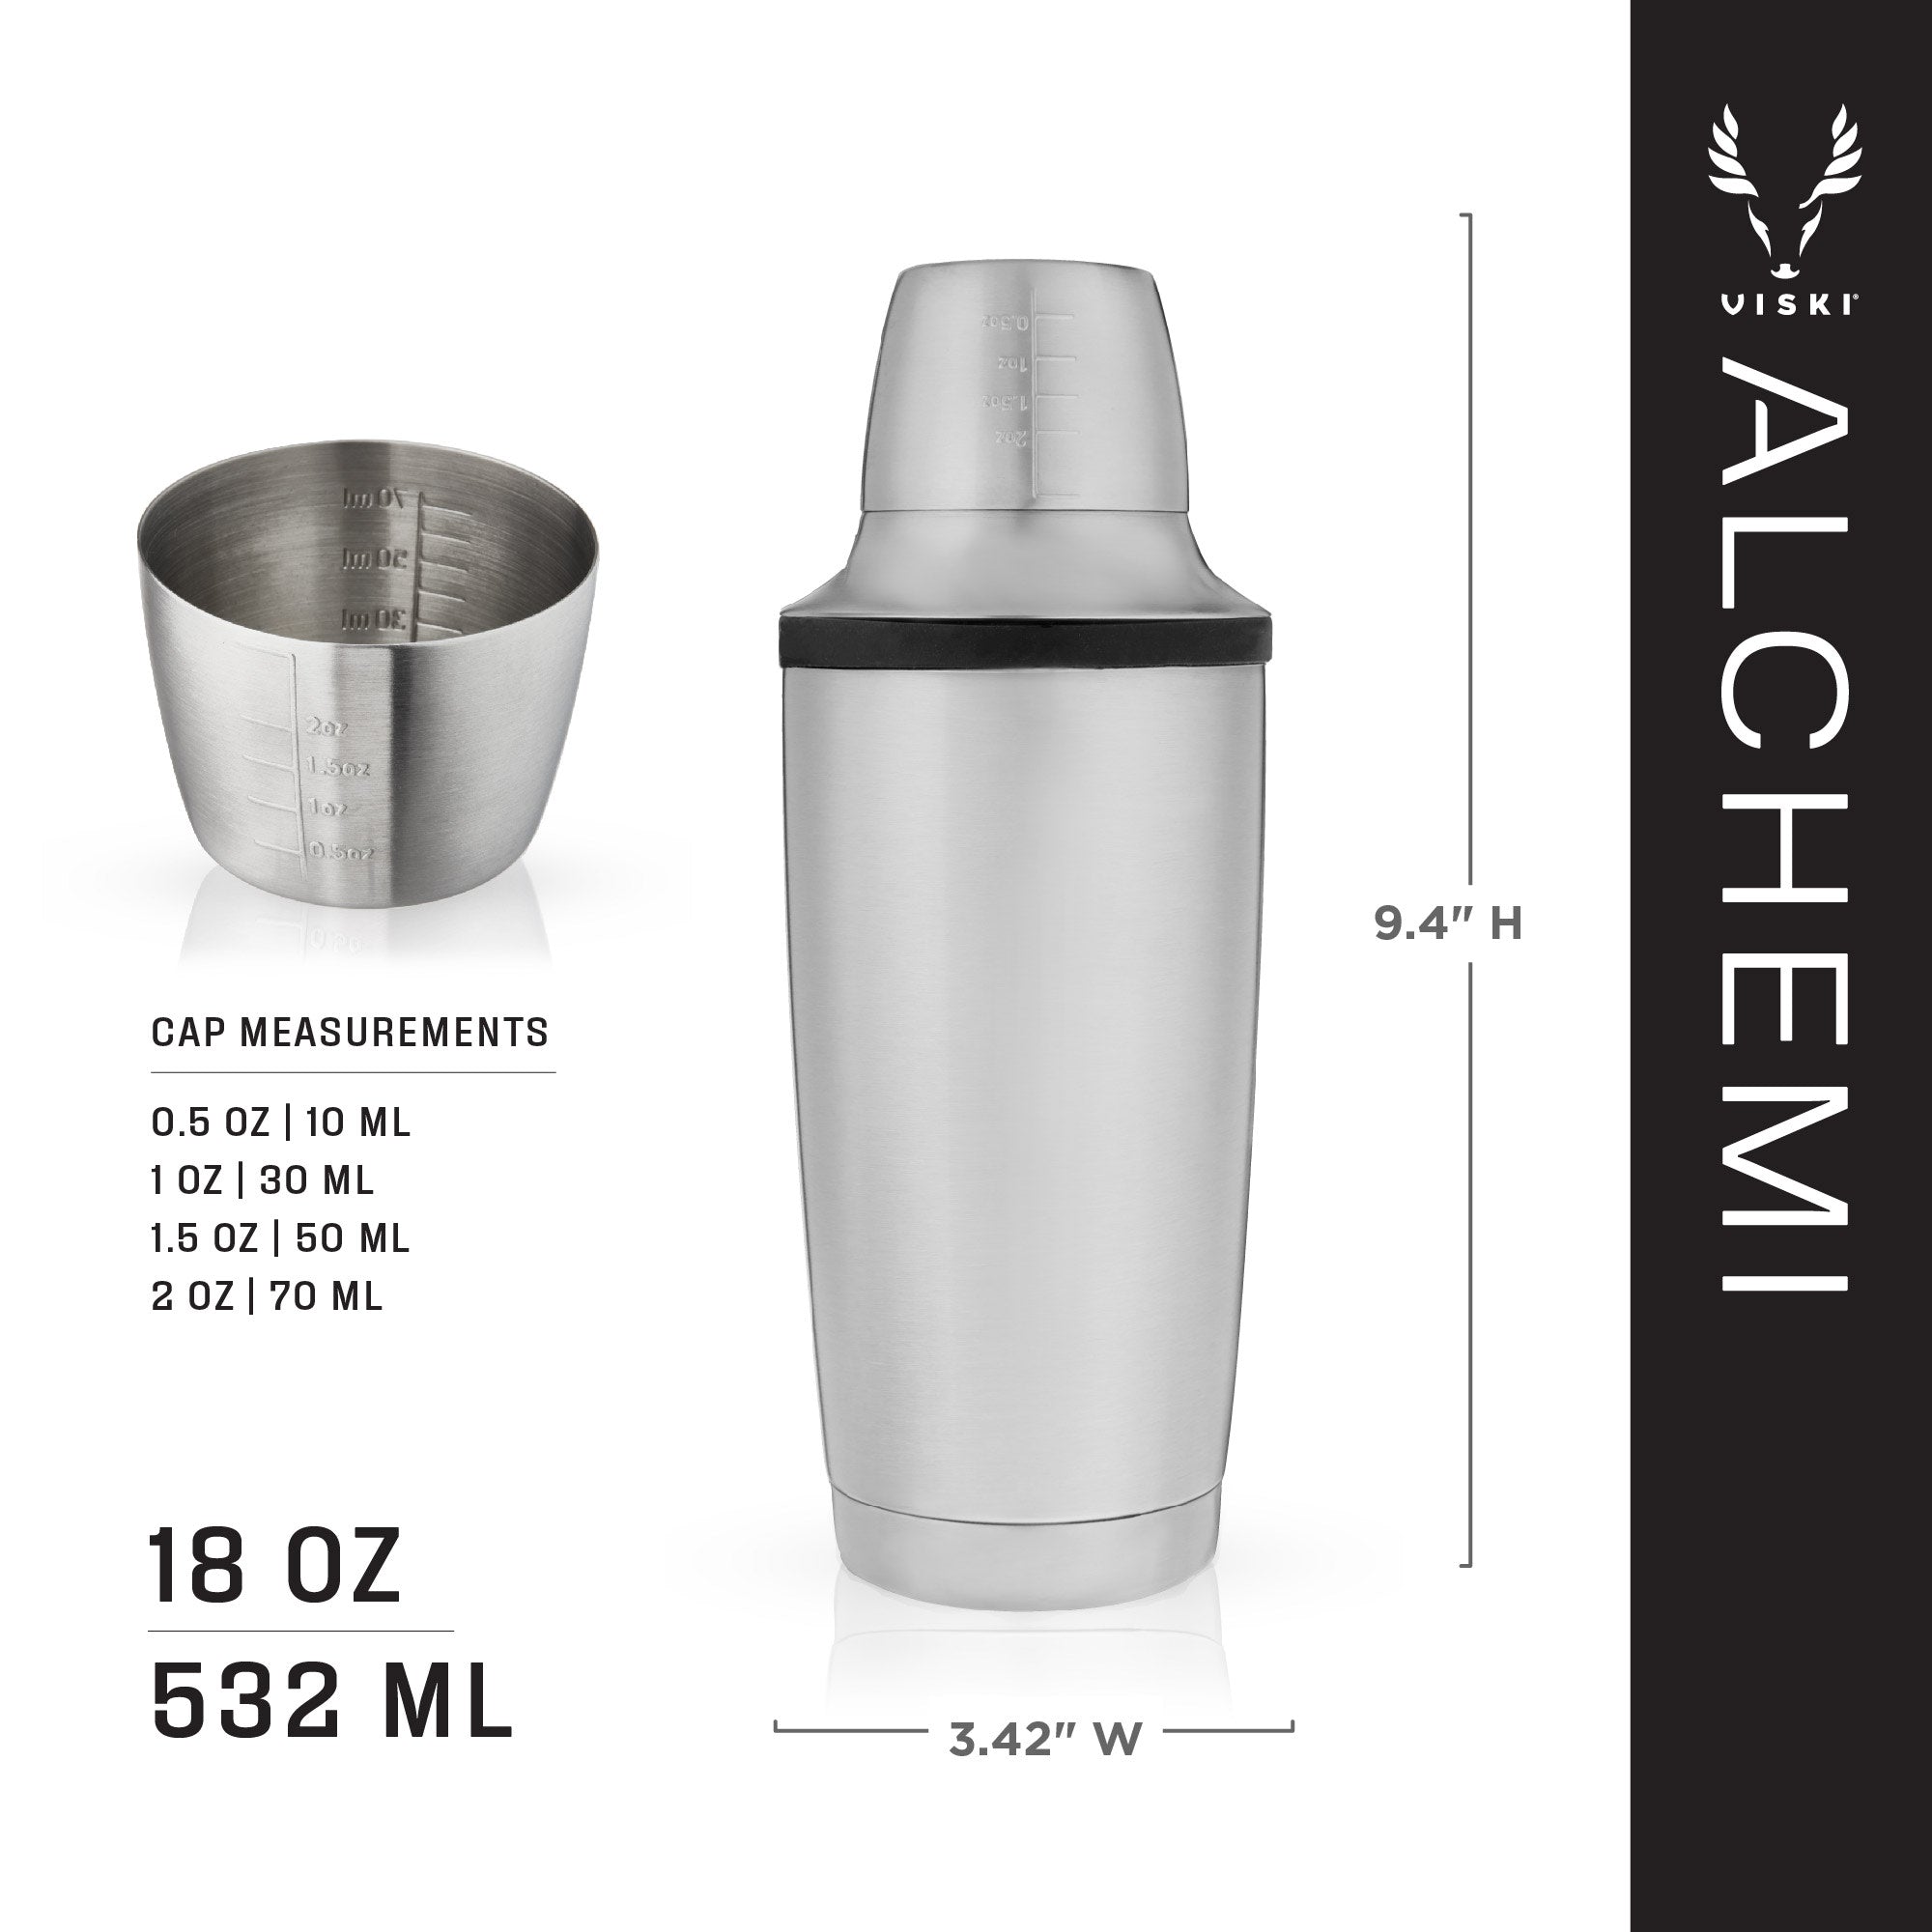 Alchemi Vacuum Insulated Shaker by Viski (11007)